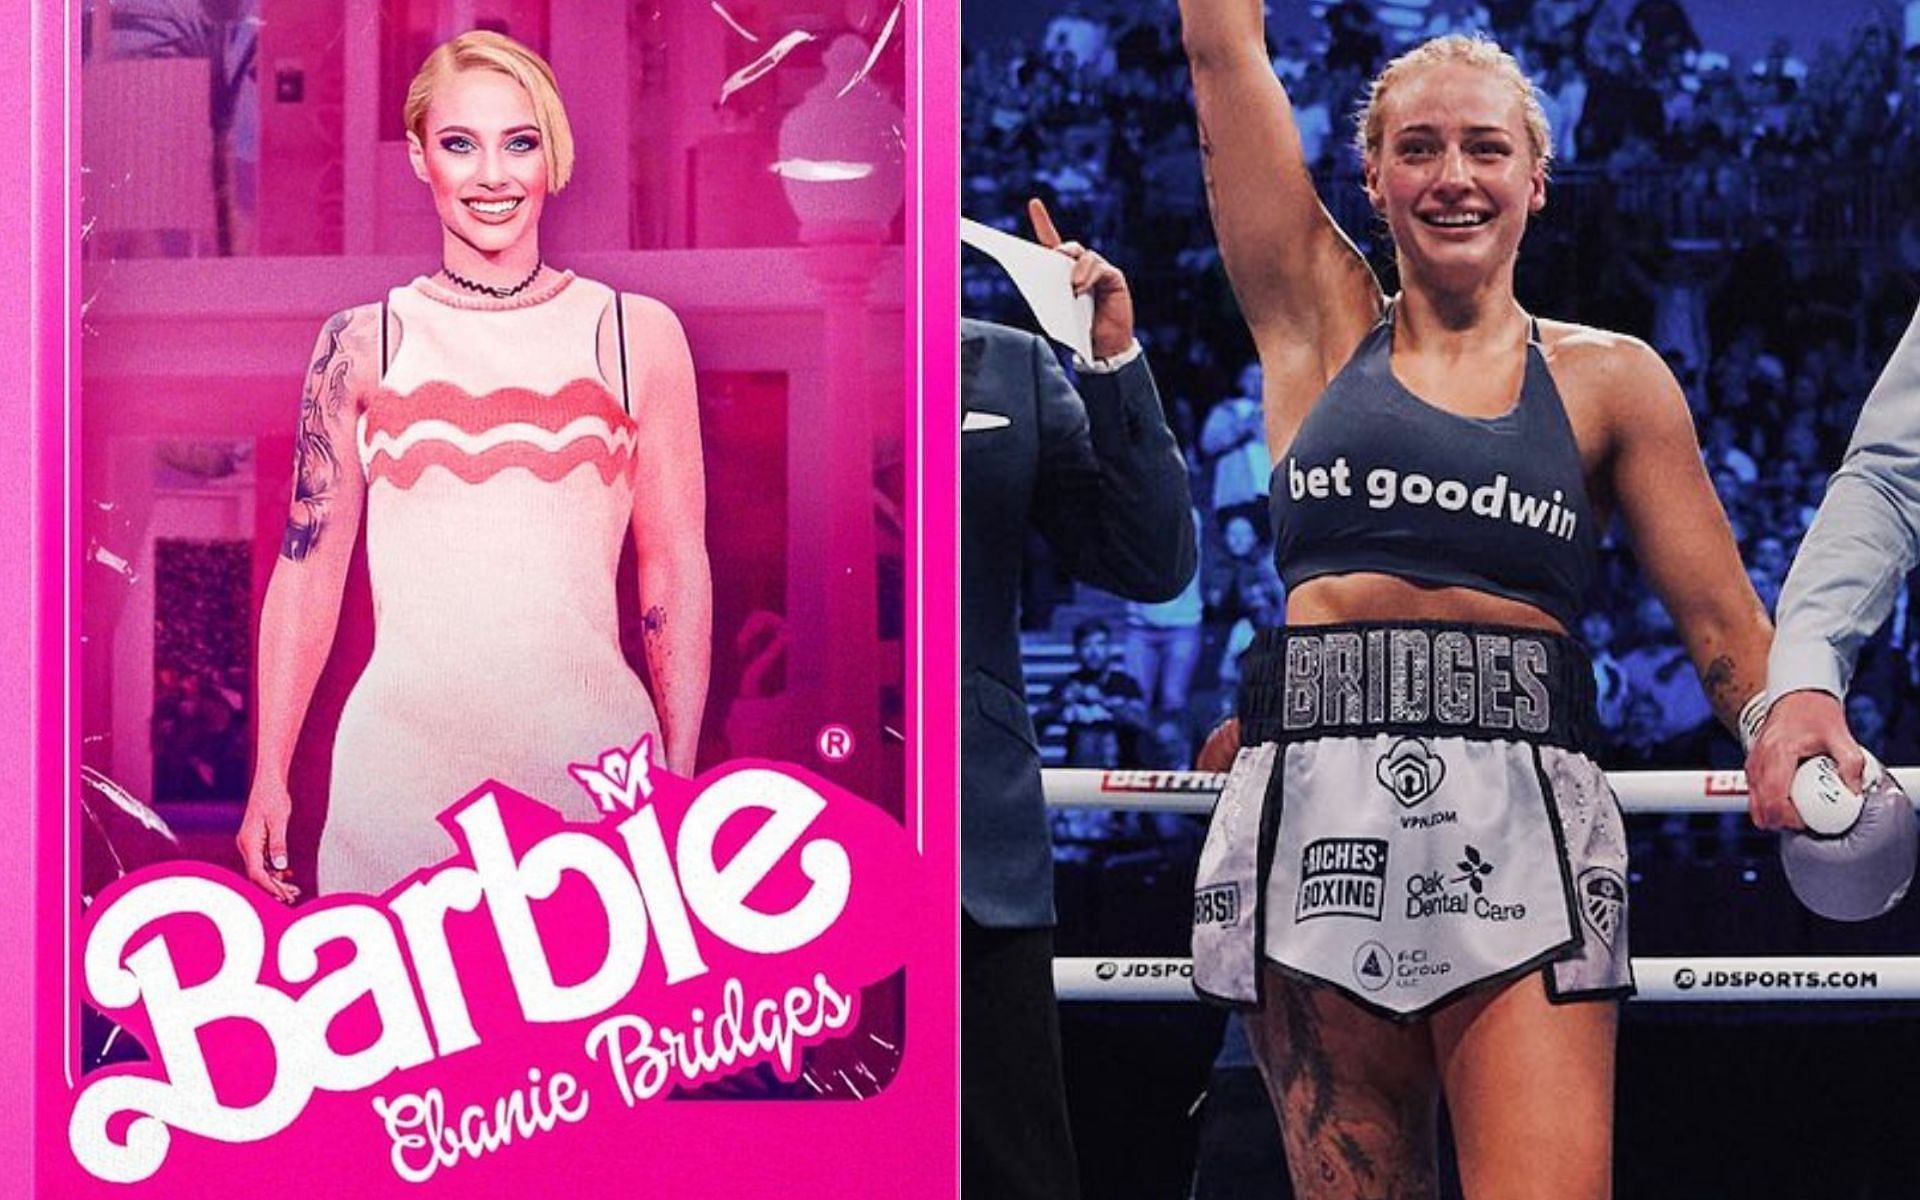 Blonde Bomber Barbie (left) Ebanie Bridges (right) [Image courtesy @ebanie_bridges on Instagram]